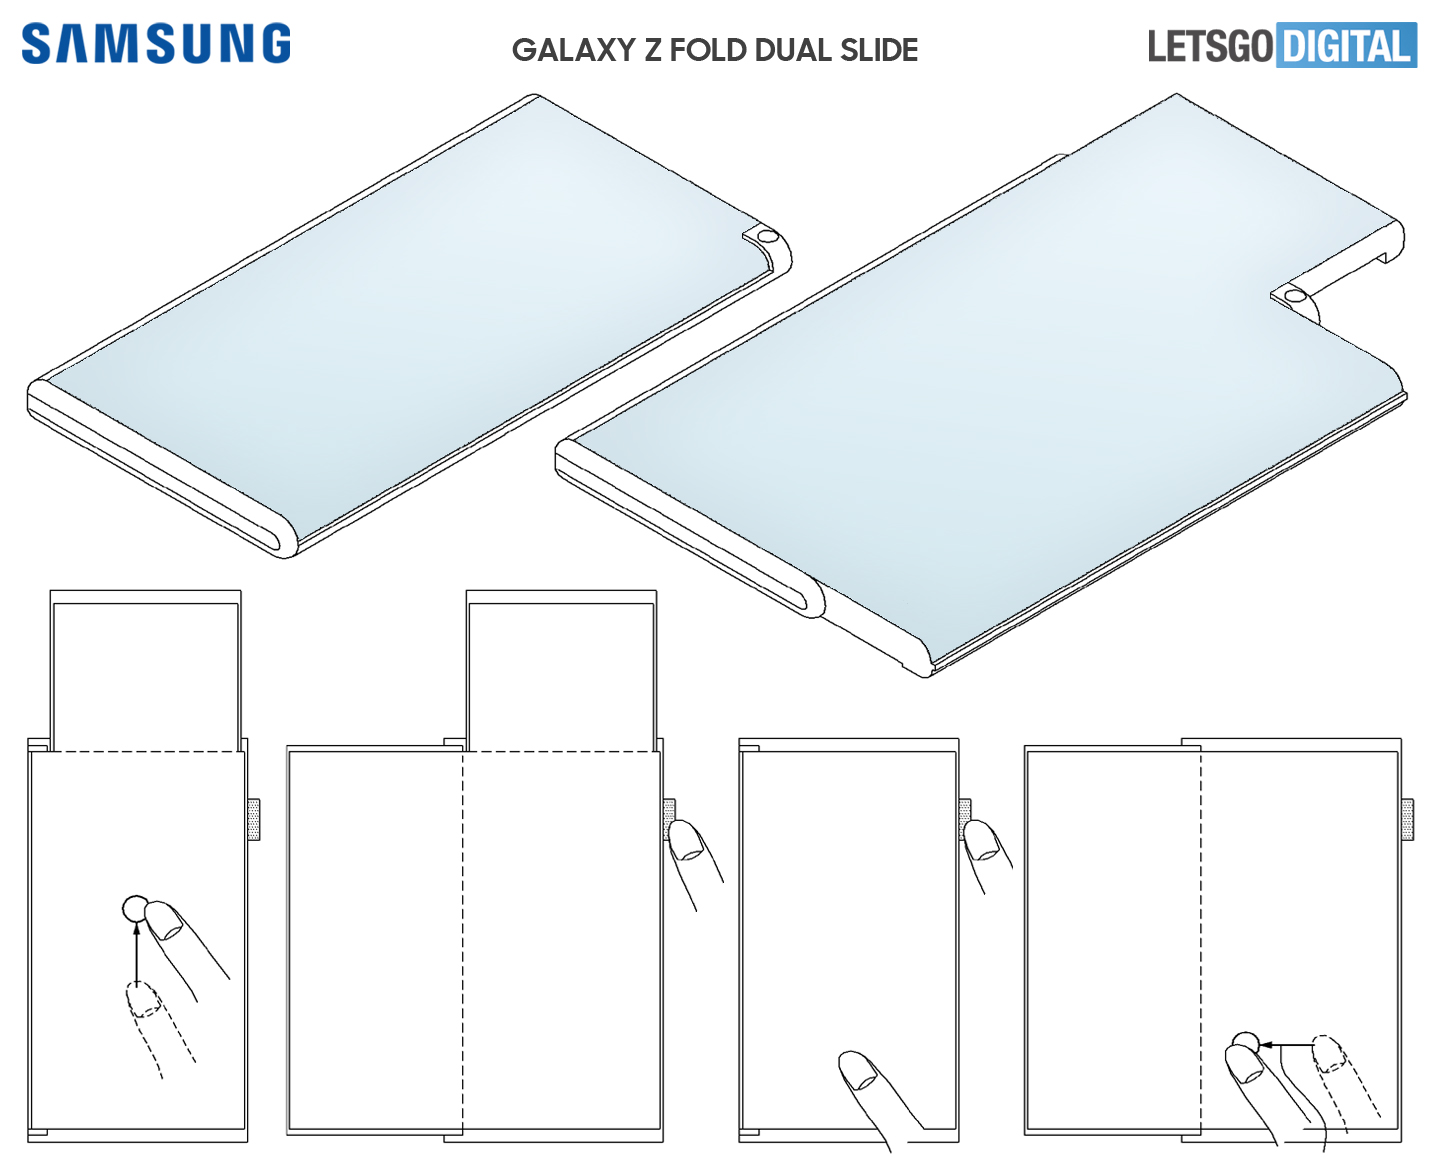 Samsung Galaxy Z Fold Dual Slide